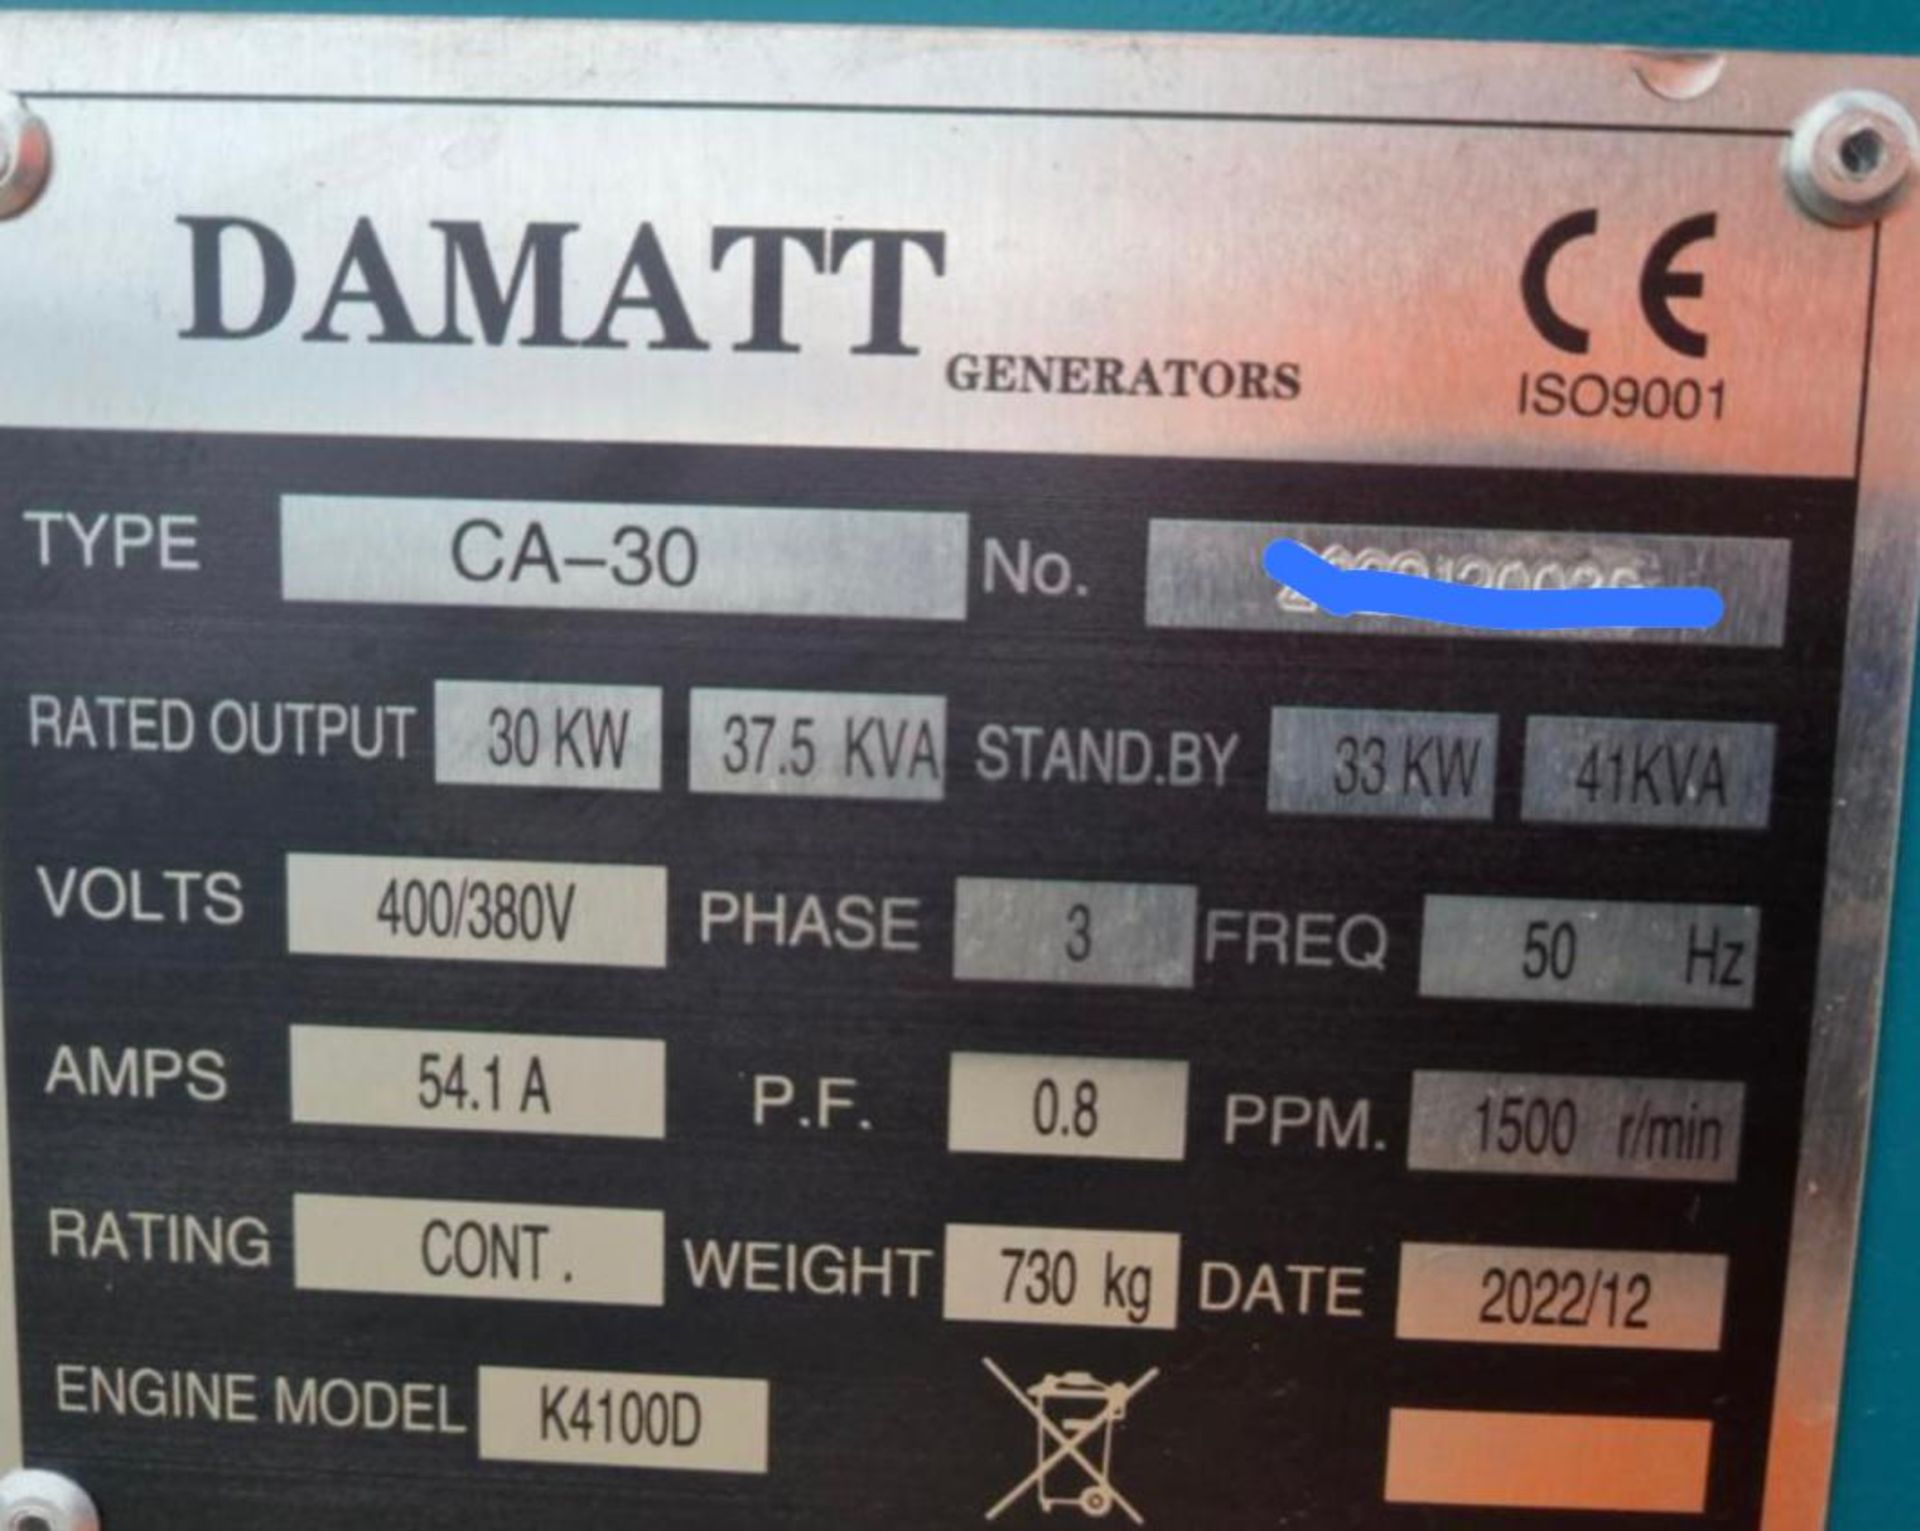 New/Unused 2022 Damatt 41KvA Diesel Generator *PLUS VAT* - Image 6 of 6